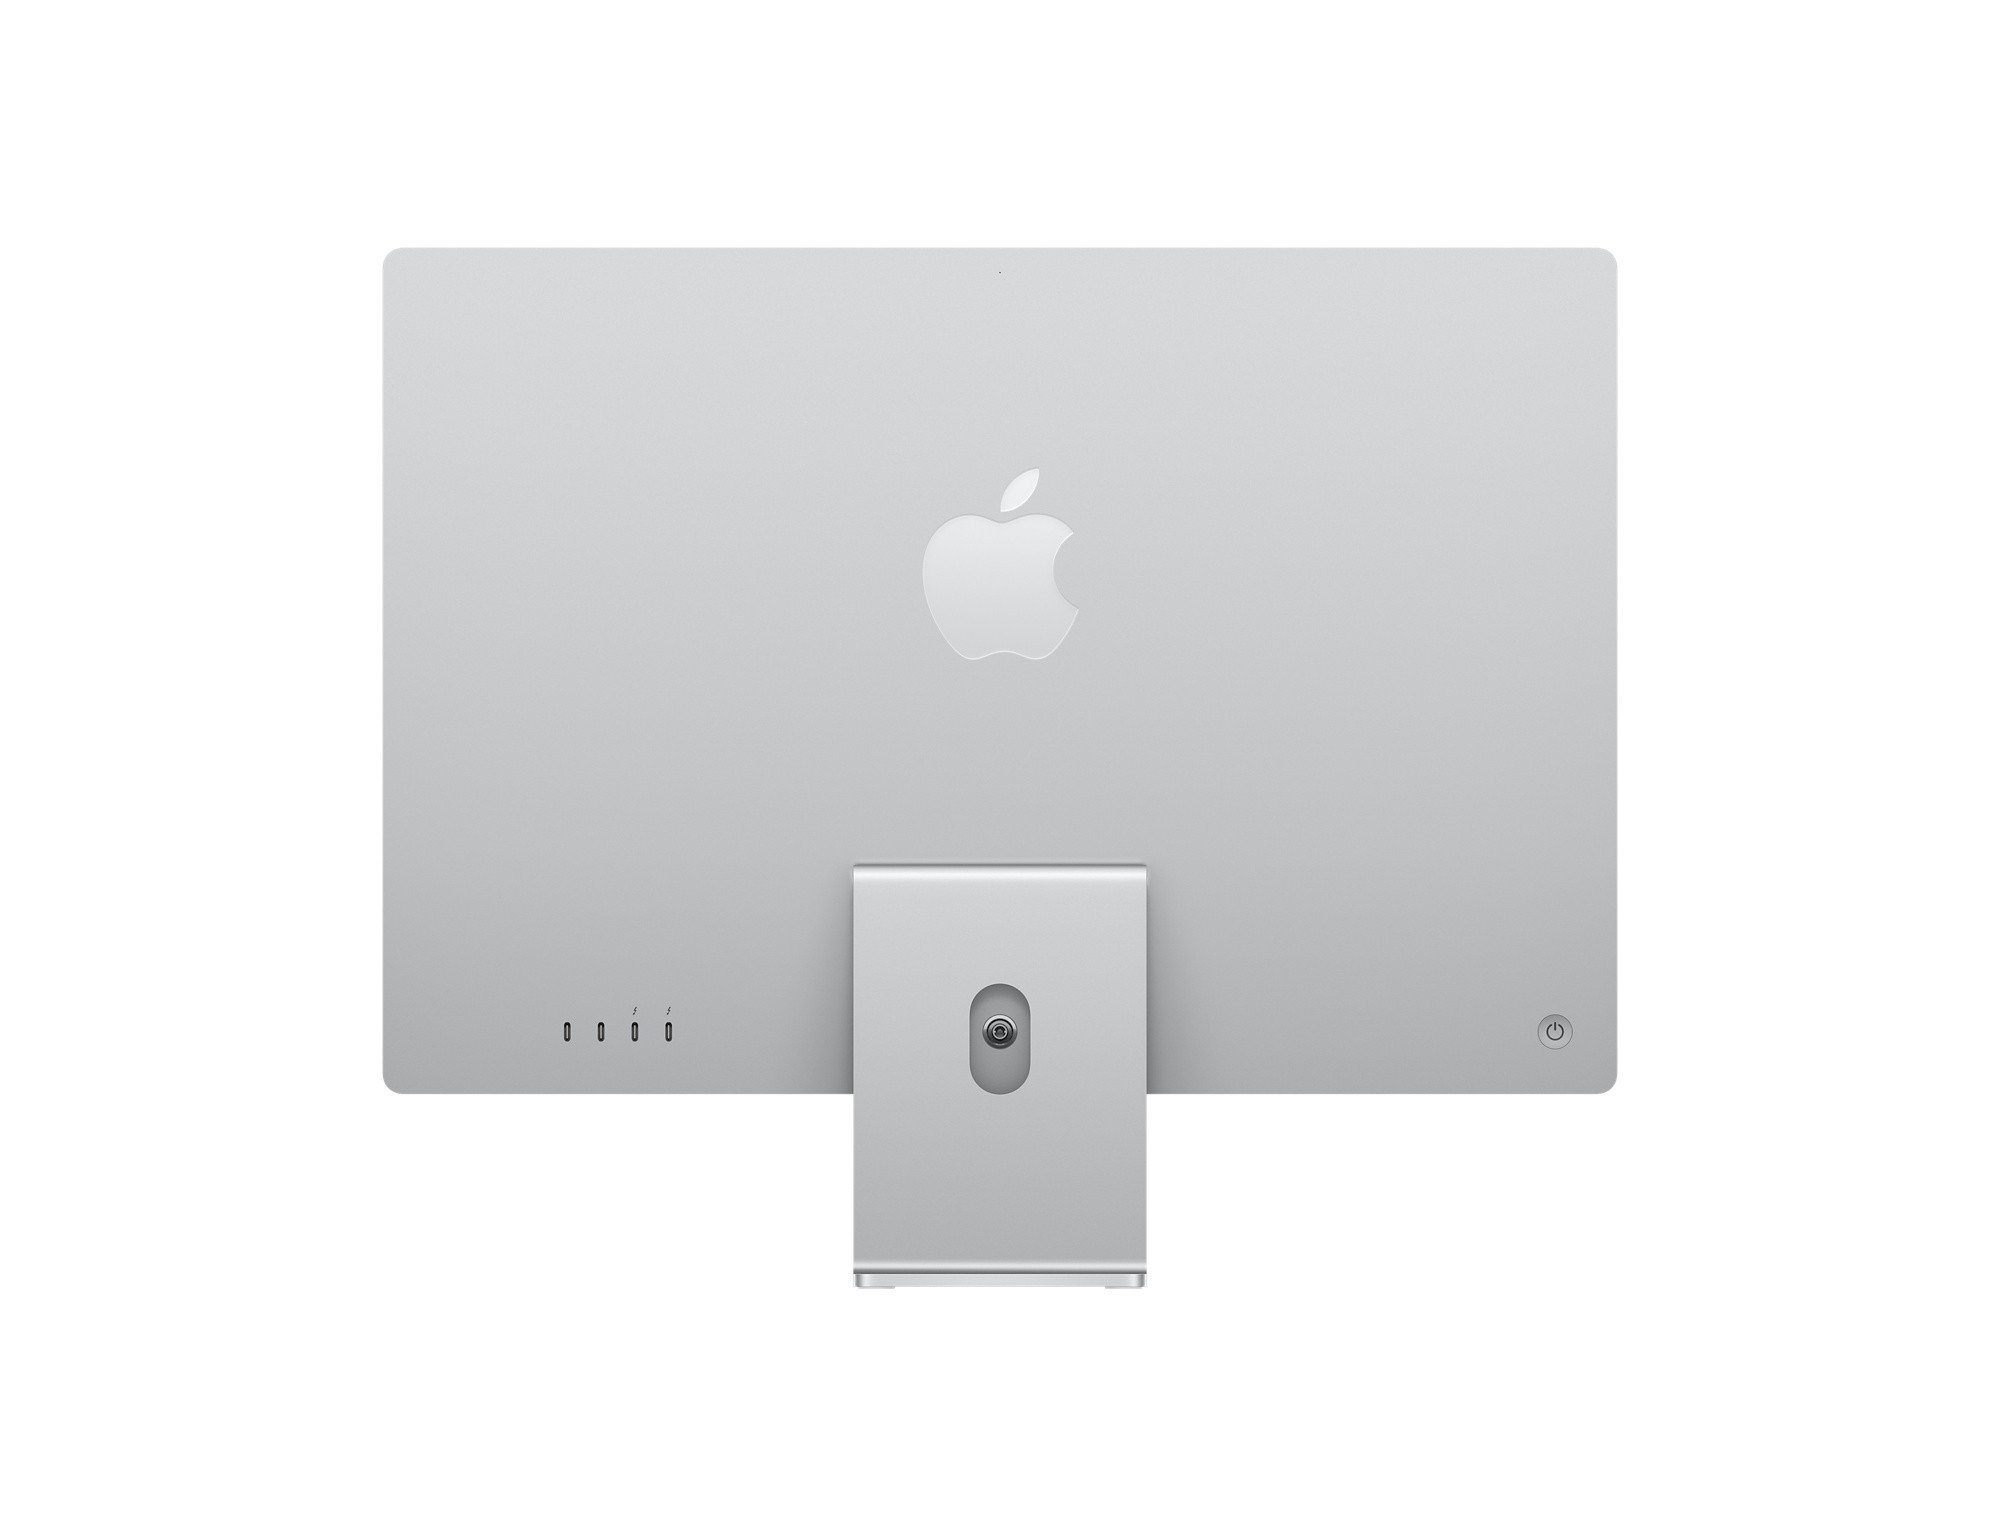 MGPD3 iMac 24 inch 4.5K display M1 Chip, 8-core CPU, 8-core GPU, 8GB Unified Memory